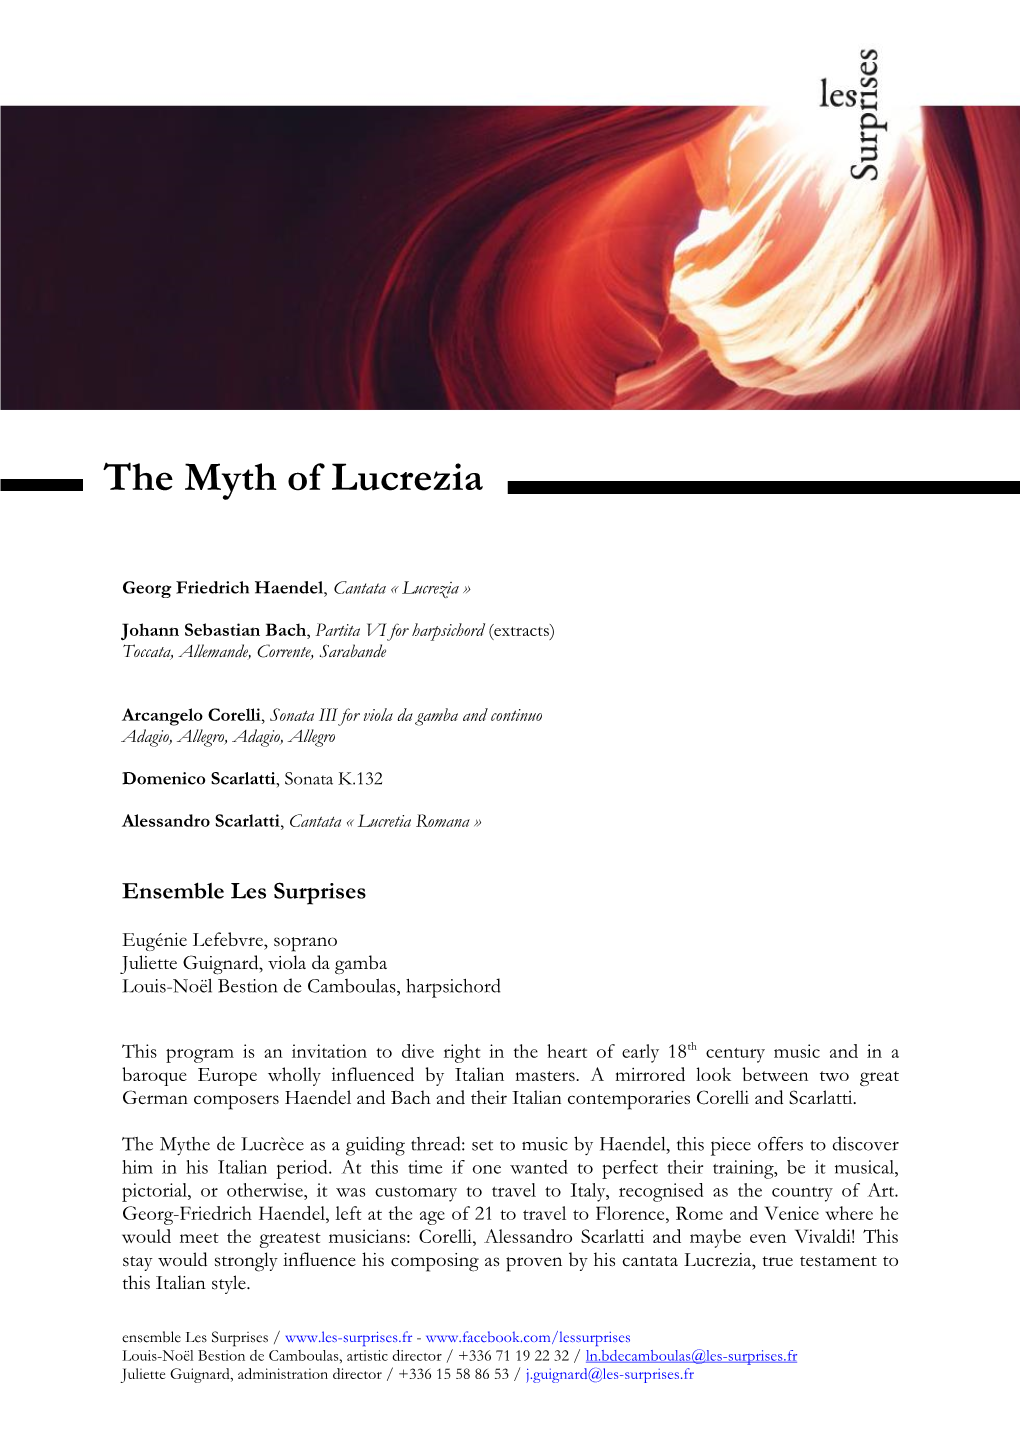 The Myth of Lucrezia